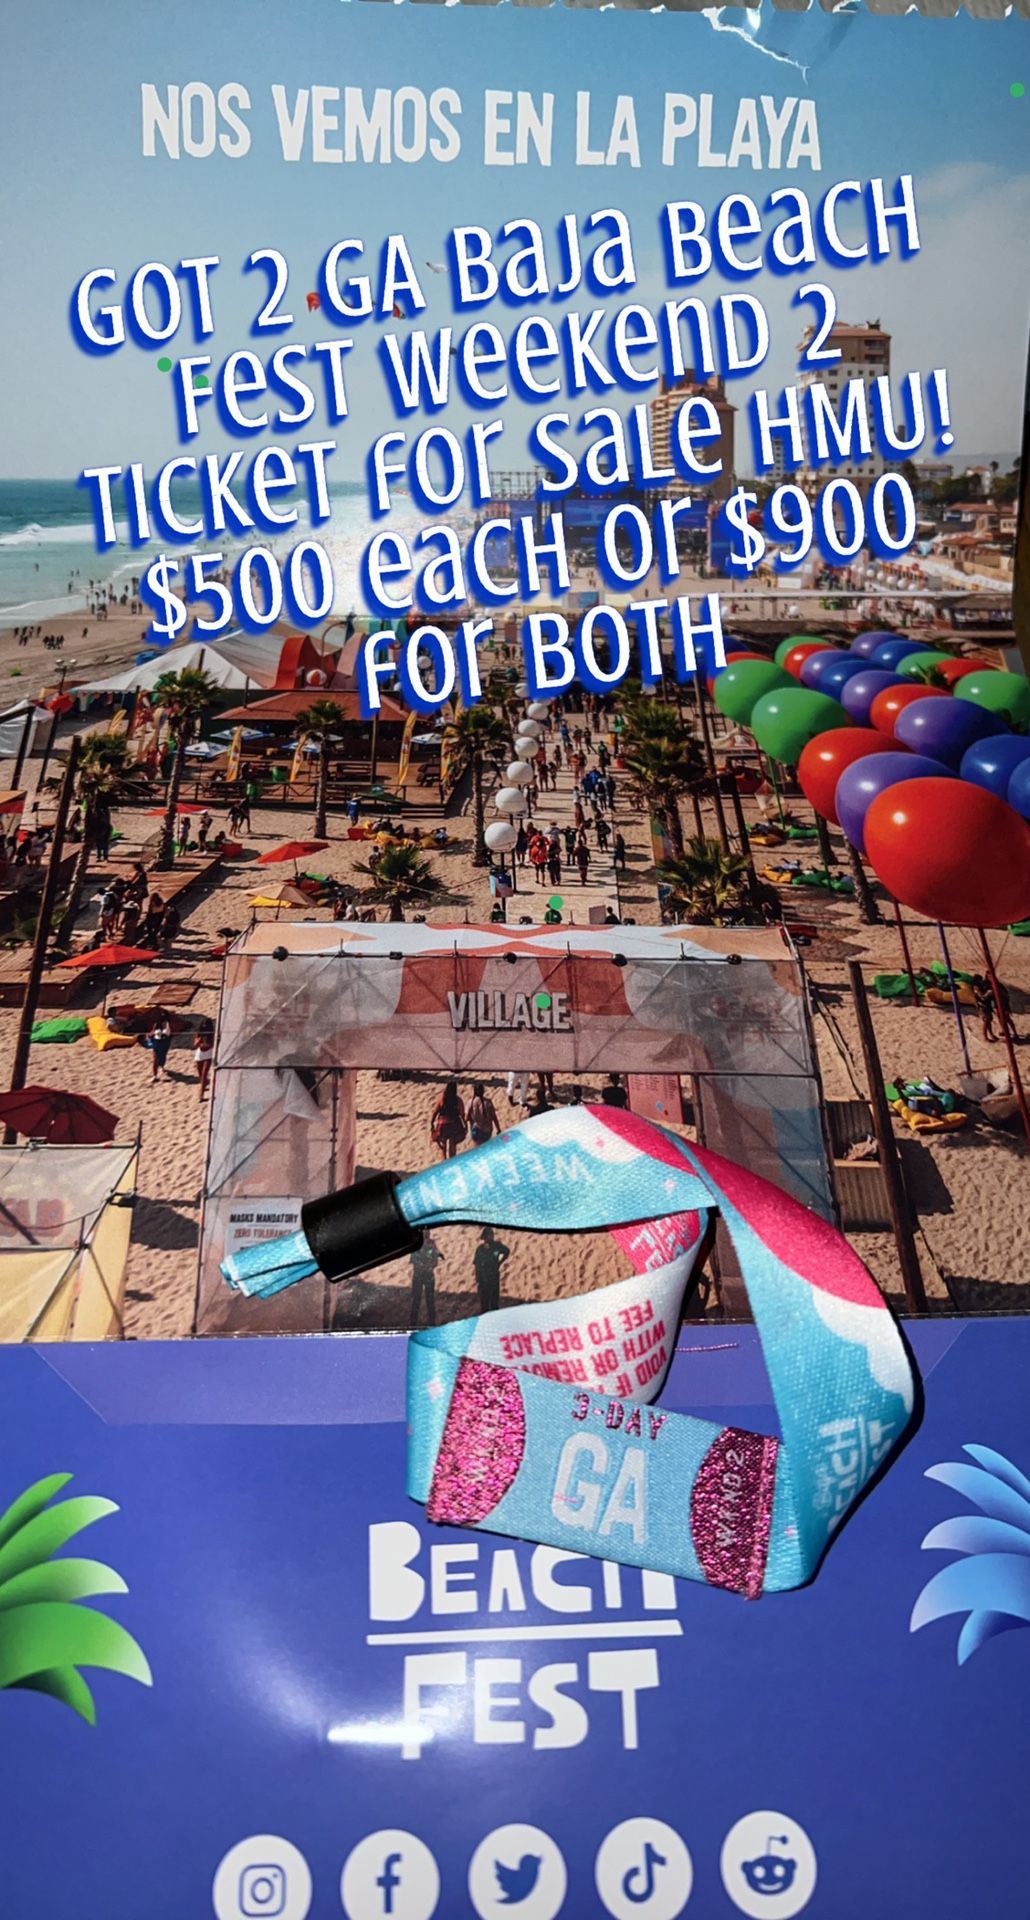 Baja Beach Fest 3 Day GA Tickets Wknd 2 